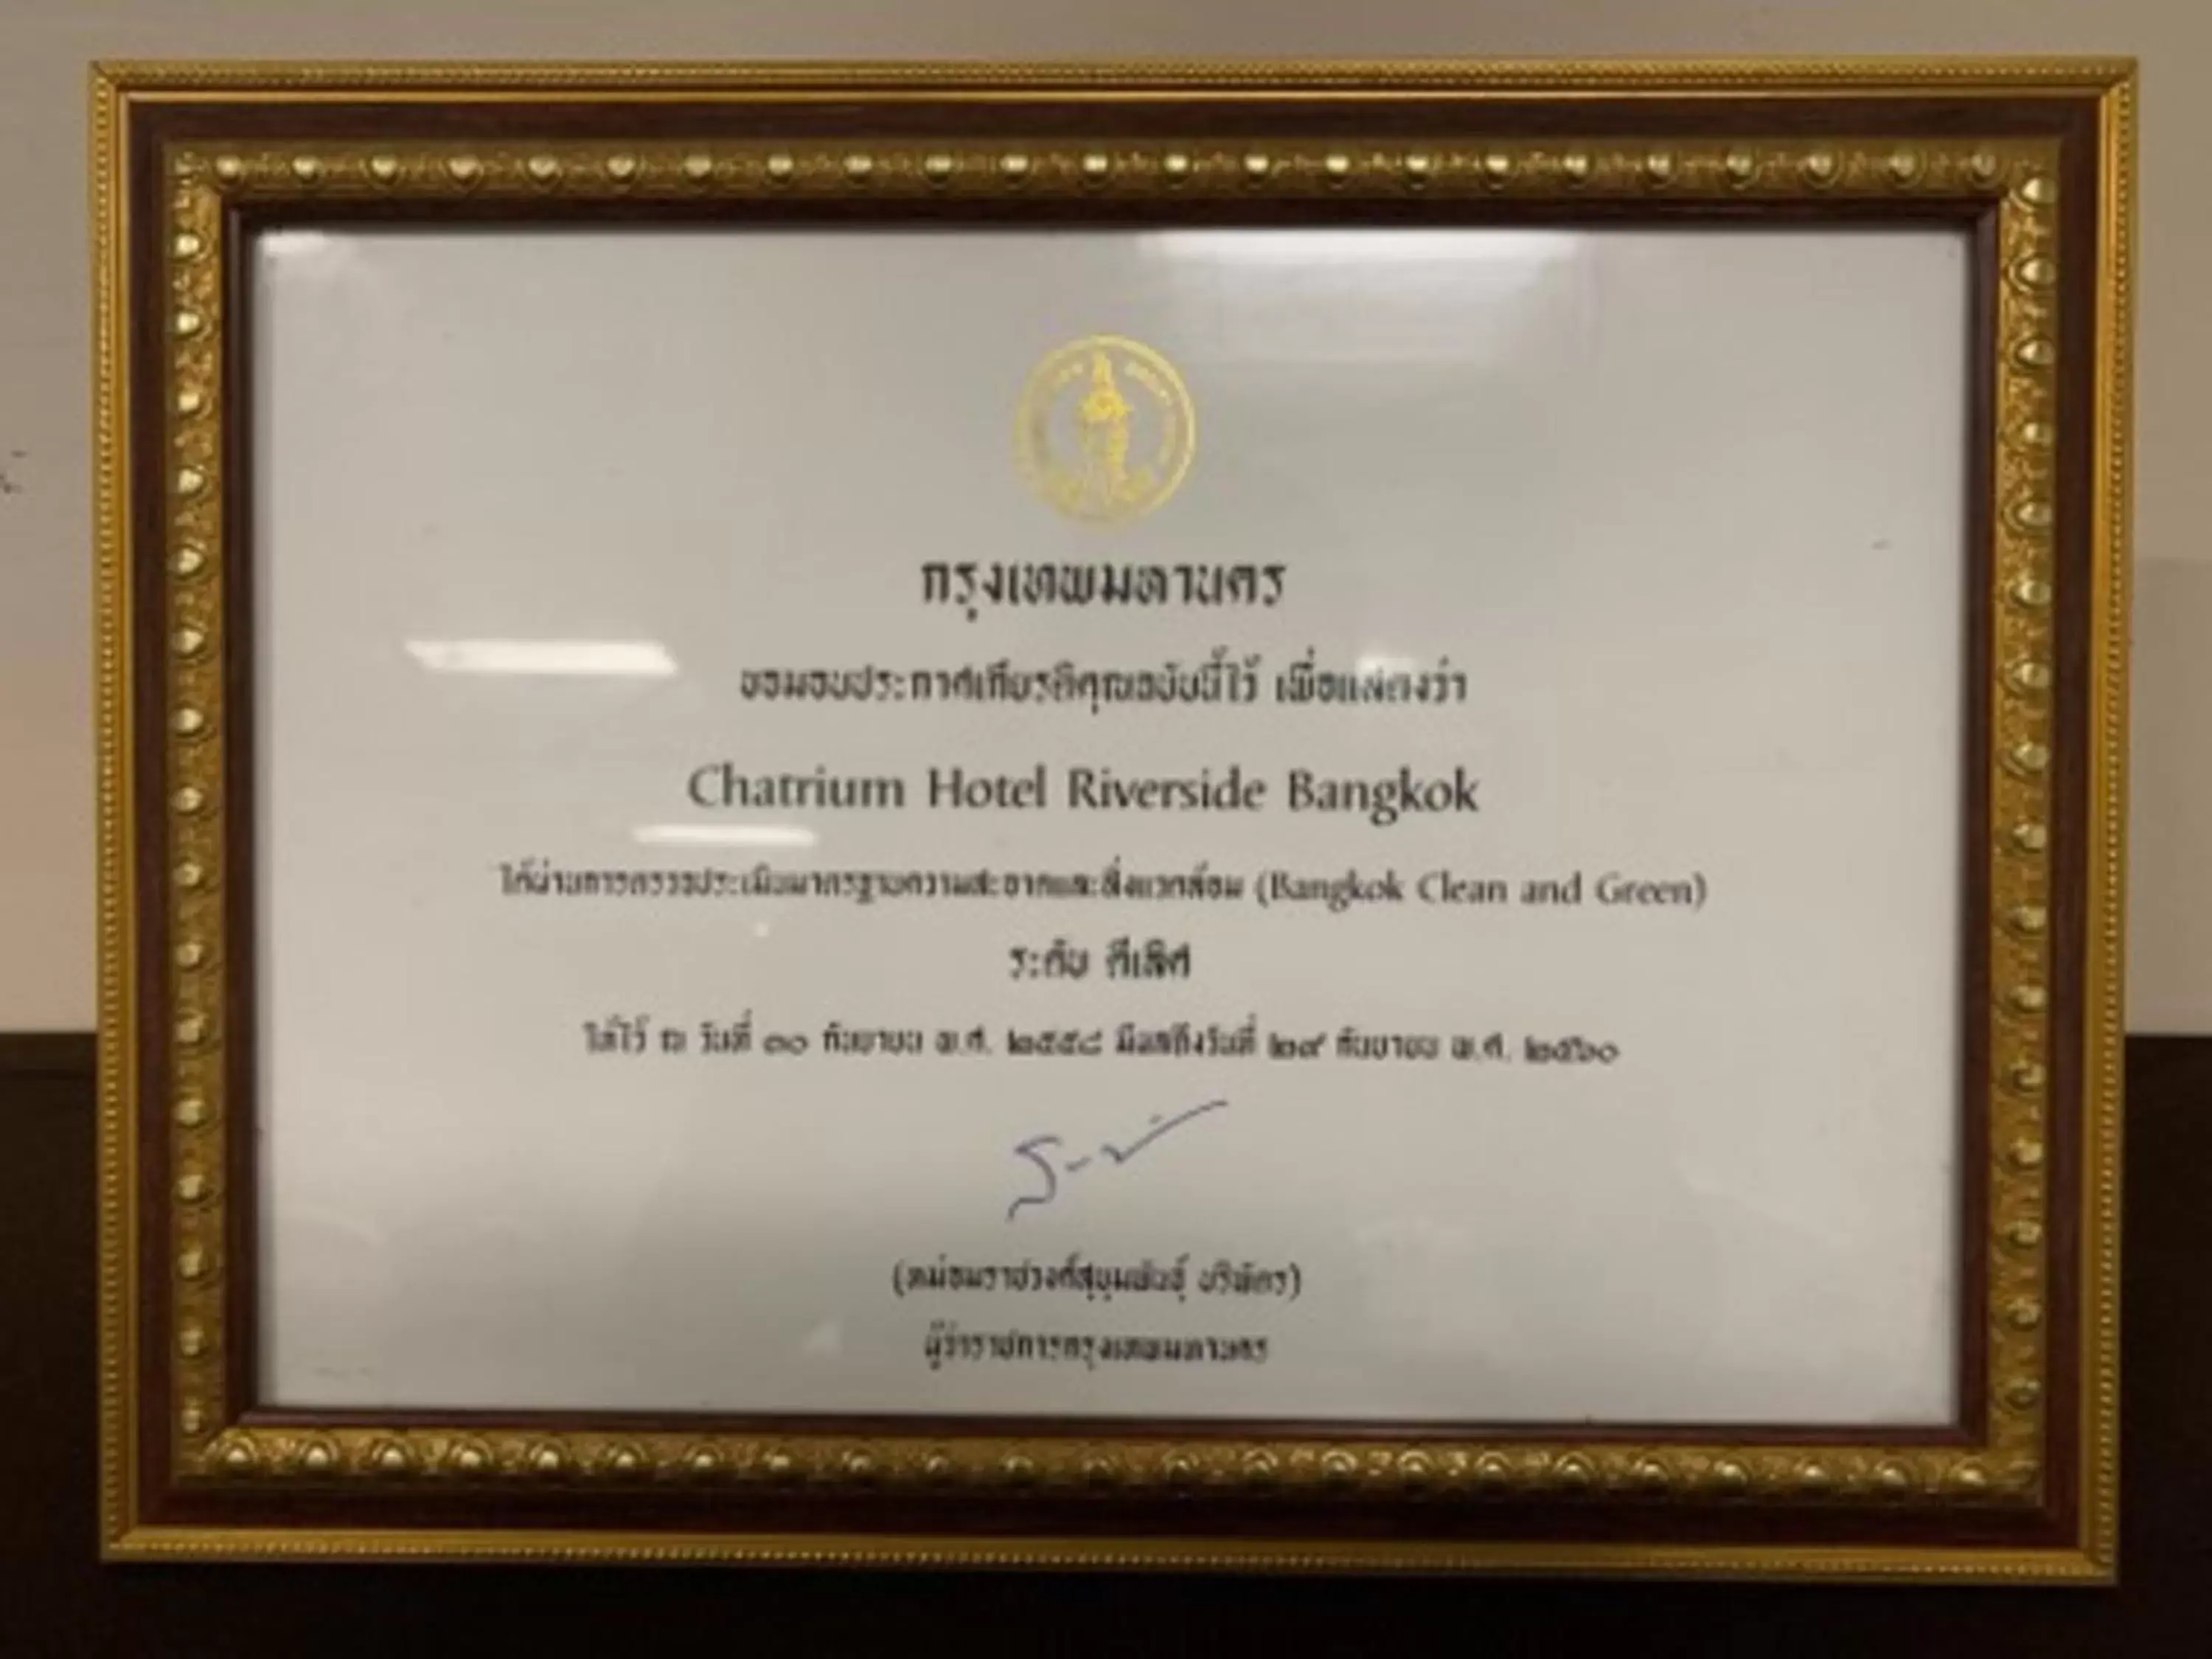 Certificate/Award in Chatrium Hotel Riverside Bangkok